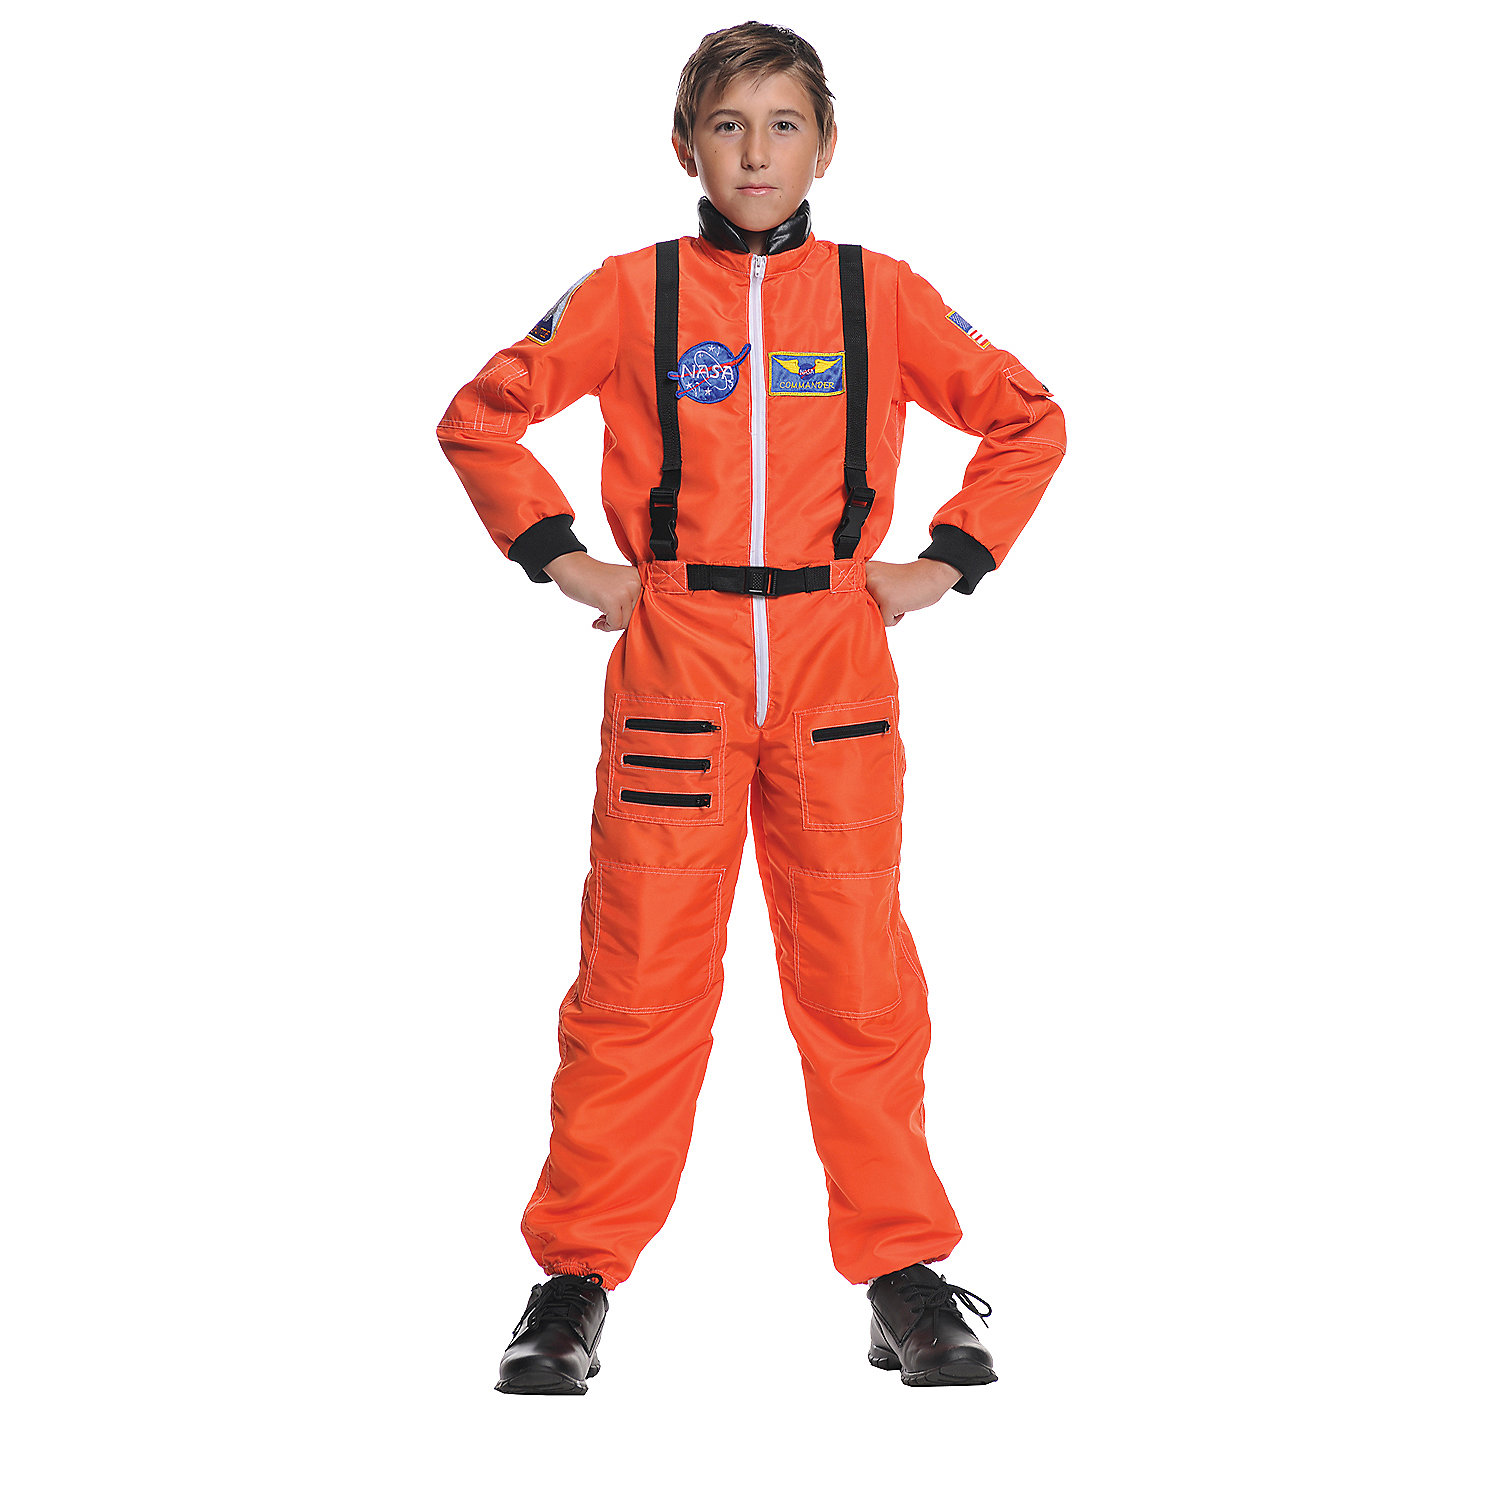 Underwraps Kids' Orange Astronaut Costume - Size 5-6 - image 1 of 2